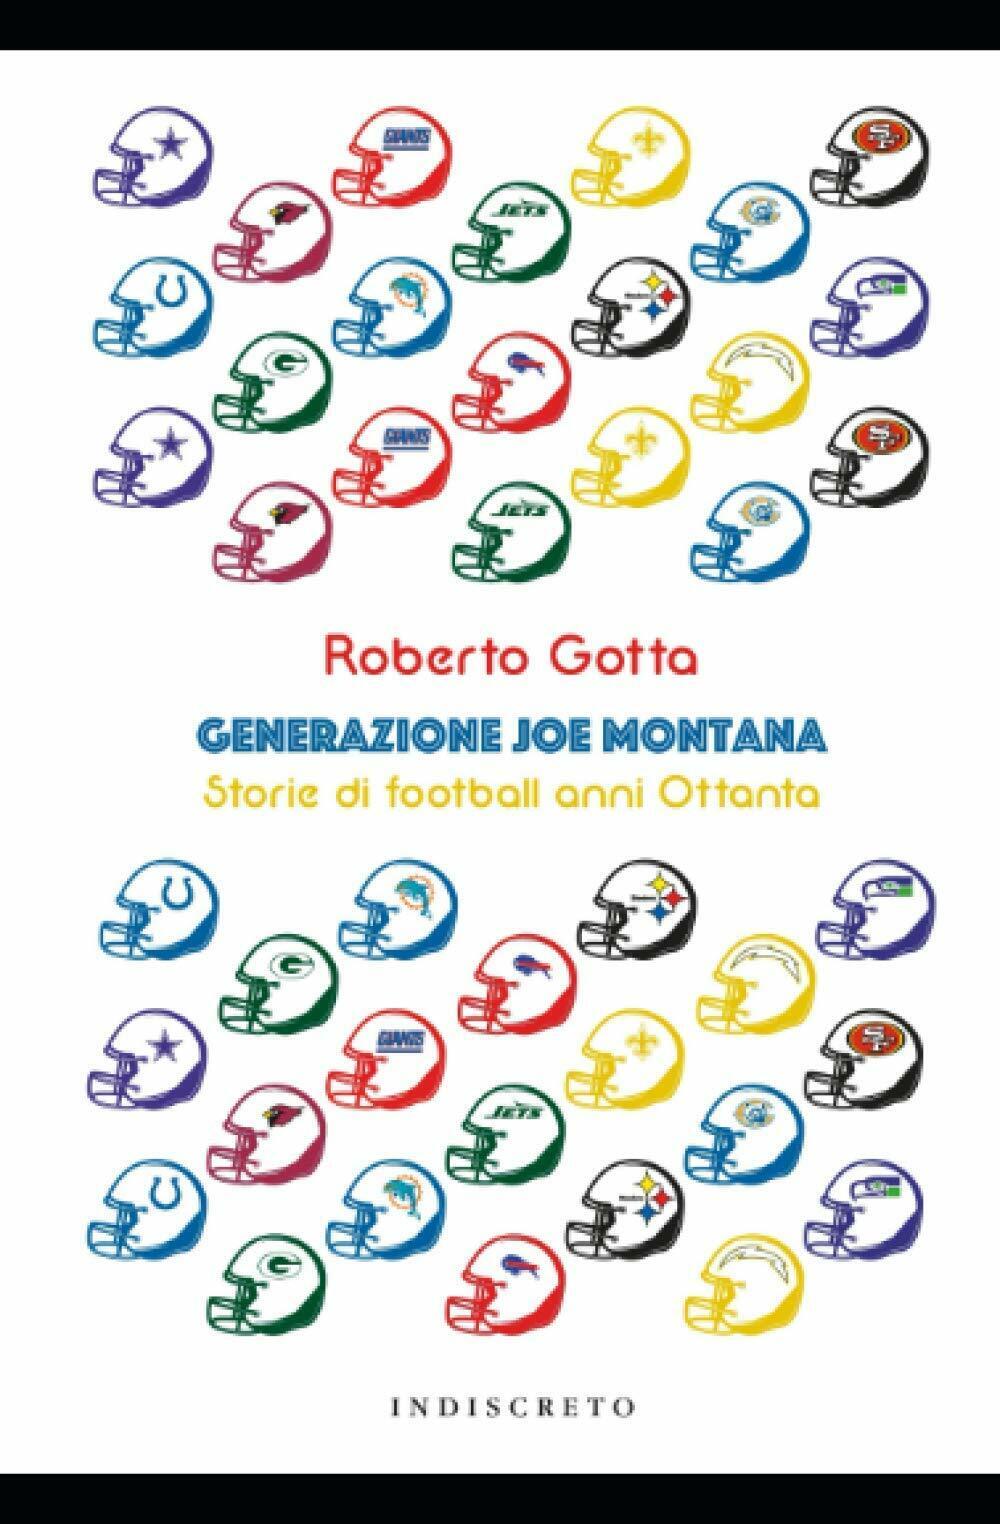 Generazione Joe Montana - Roberto Gotta - Indiscreto, 2020